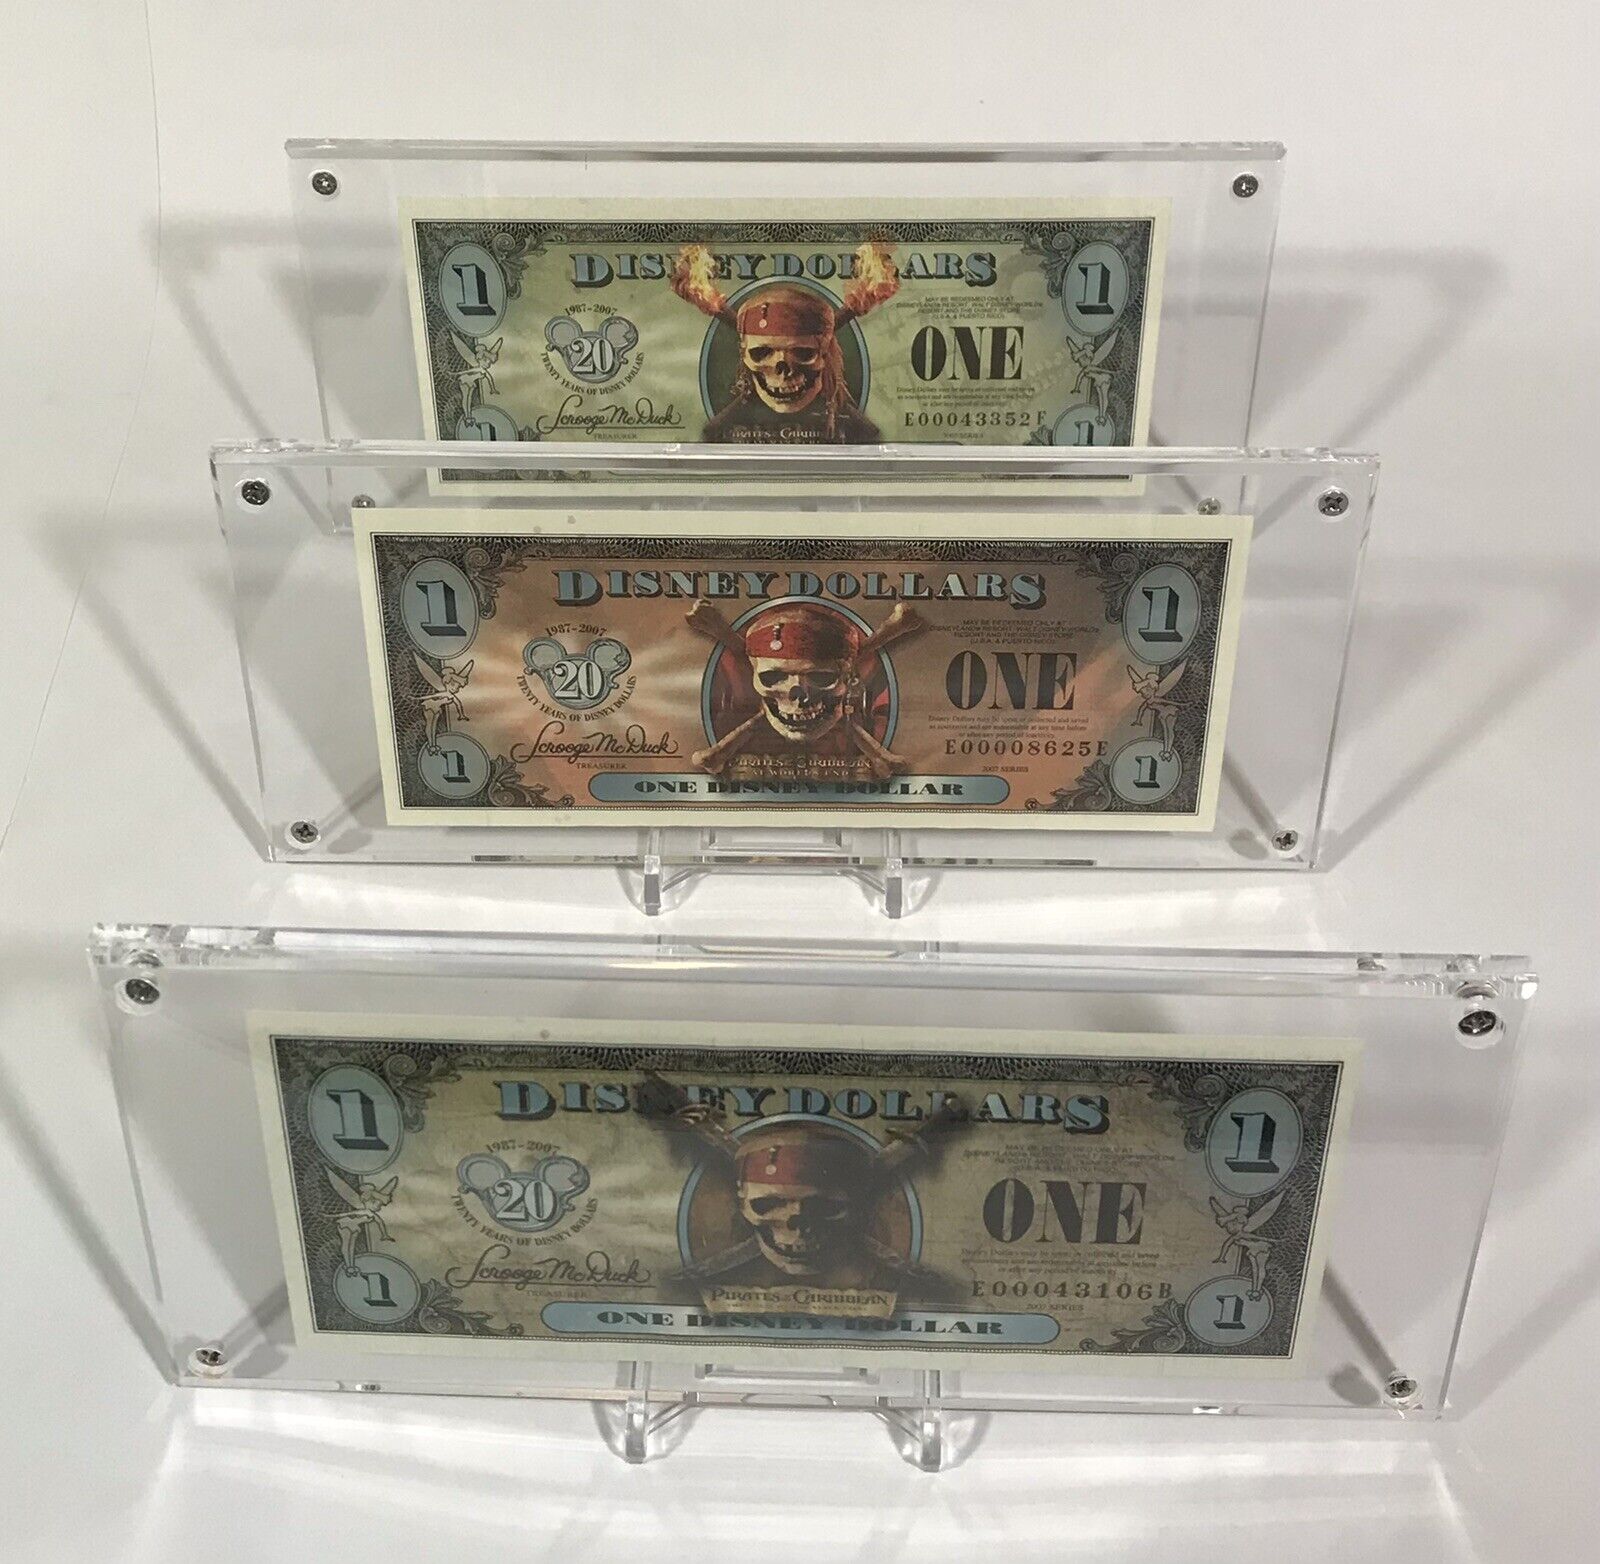 2007 Disney Dollars $1 PIRATES OF THE CARIBBEAN SET OF 3 in Display Holders